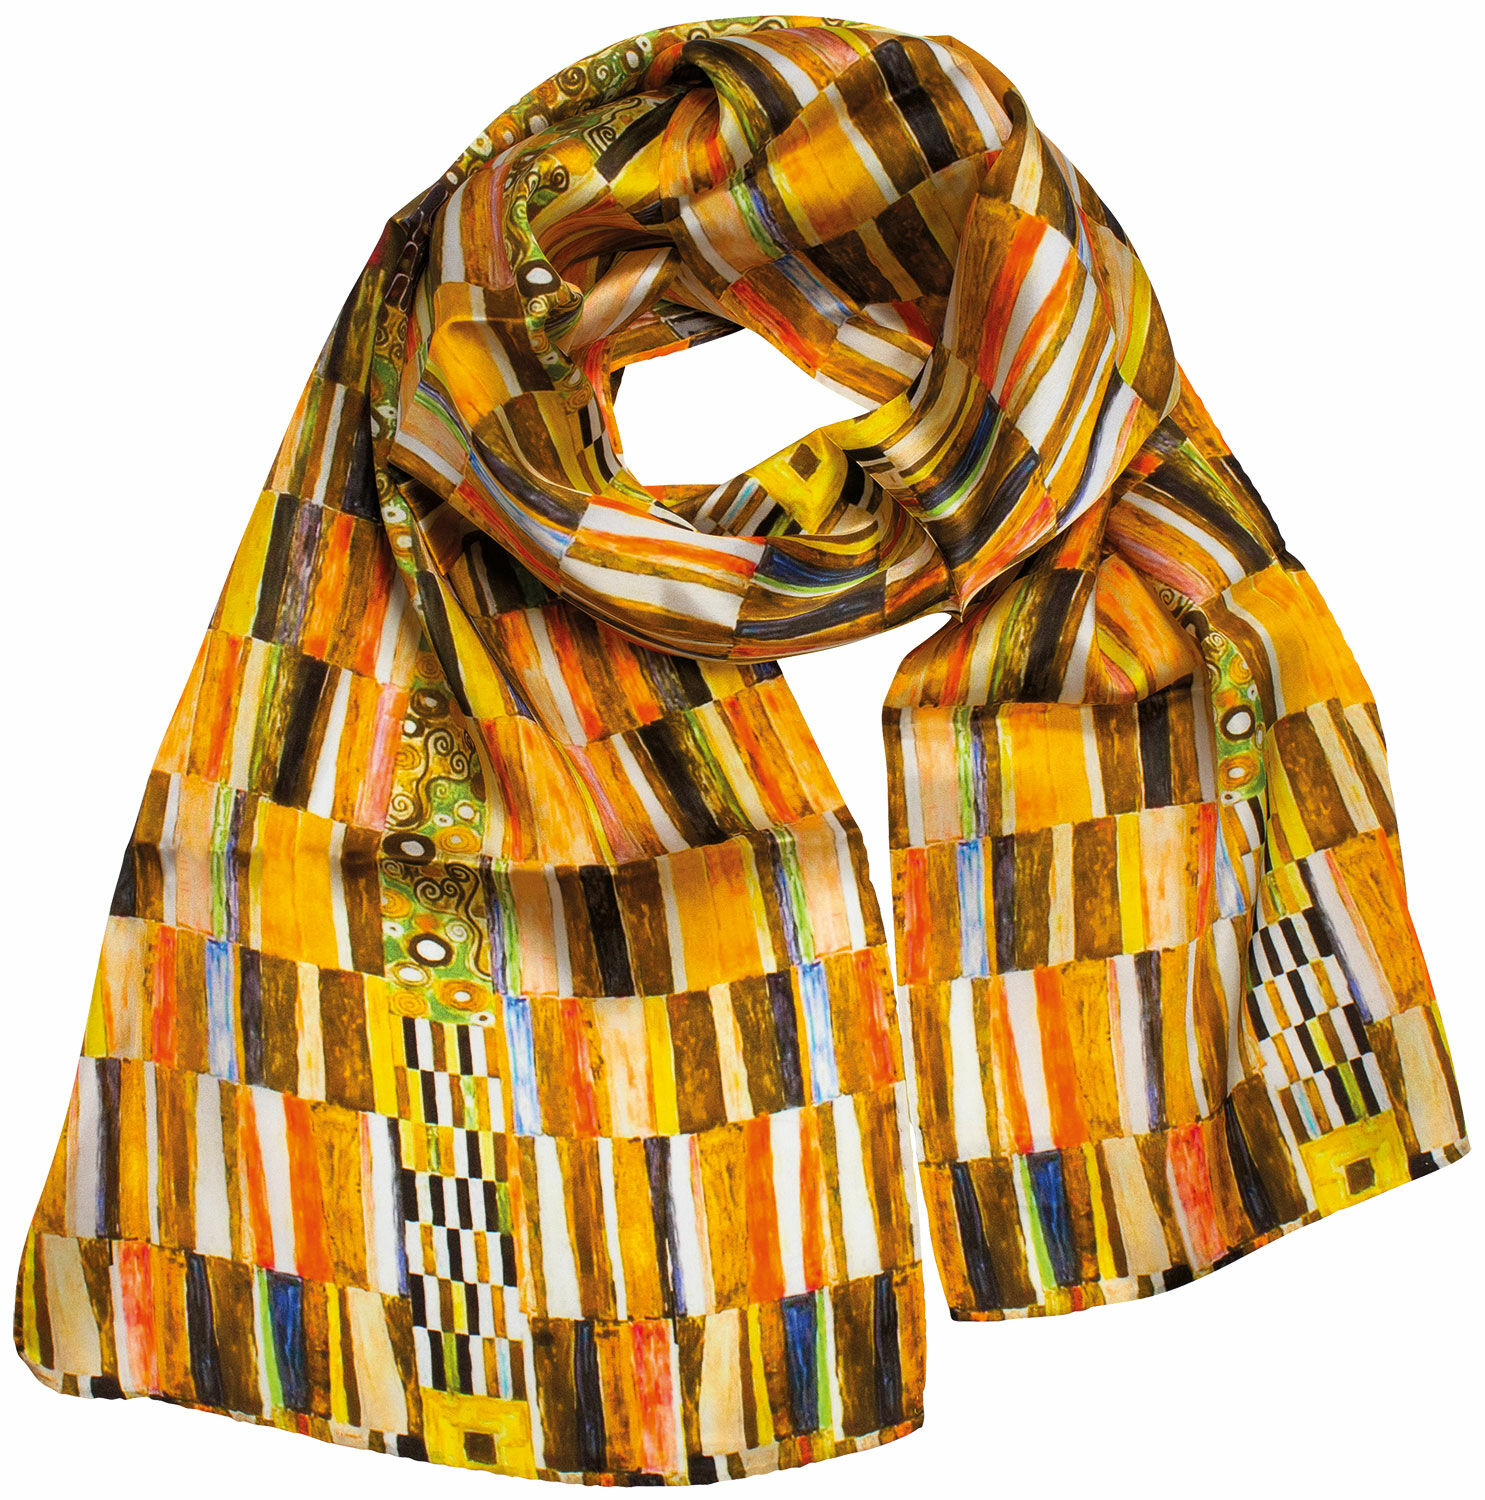 Silk scarf "Stoclet Frieze" by Gustav Klimt